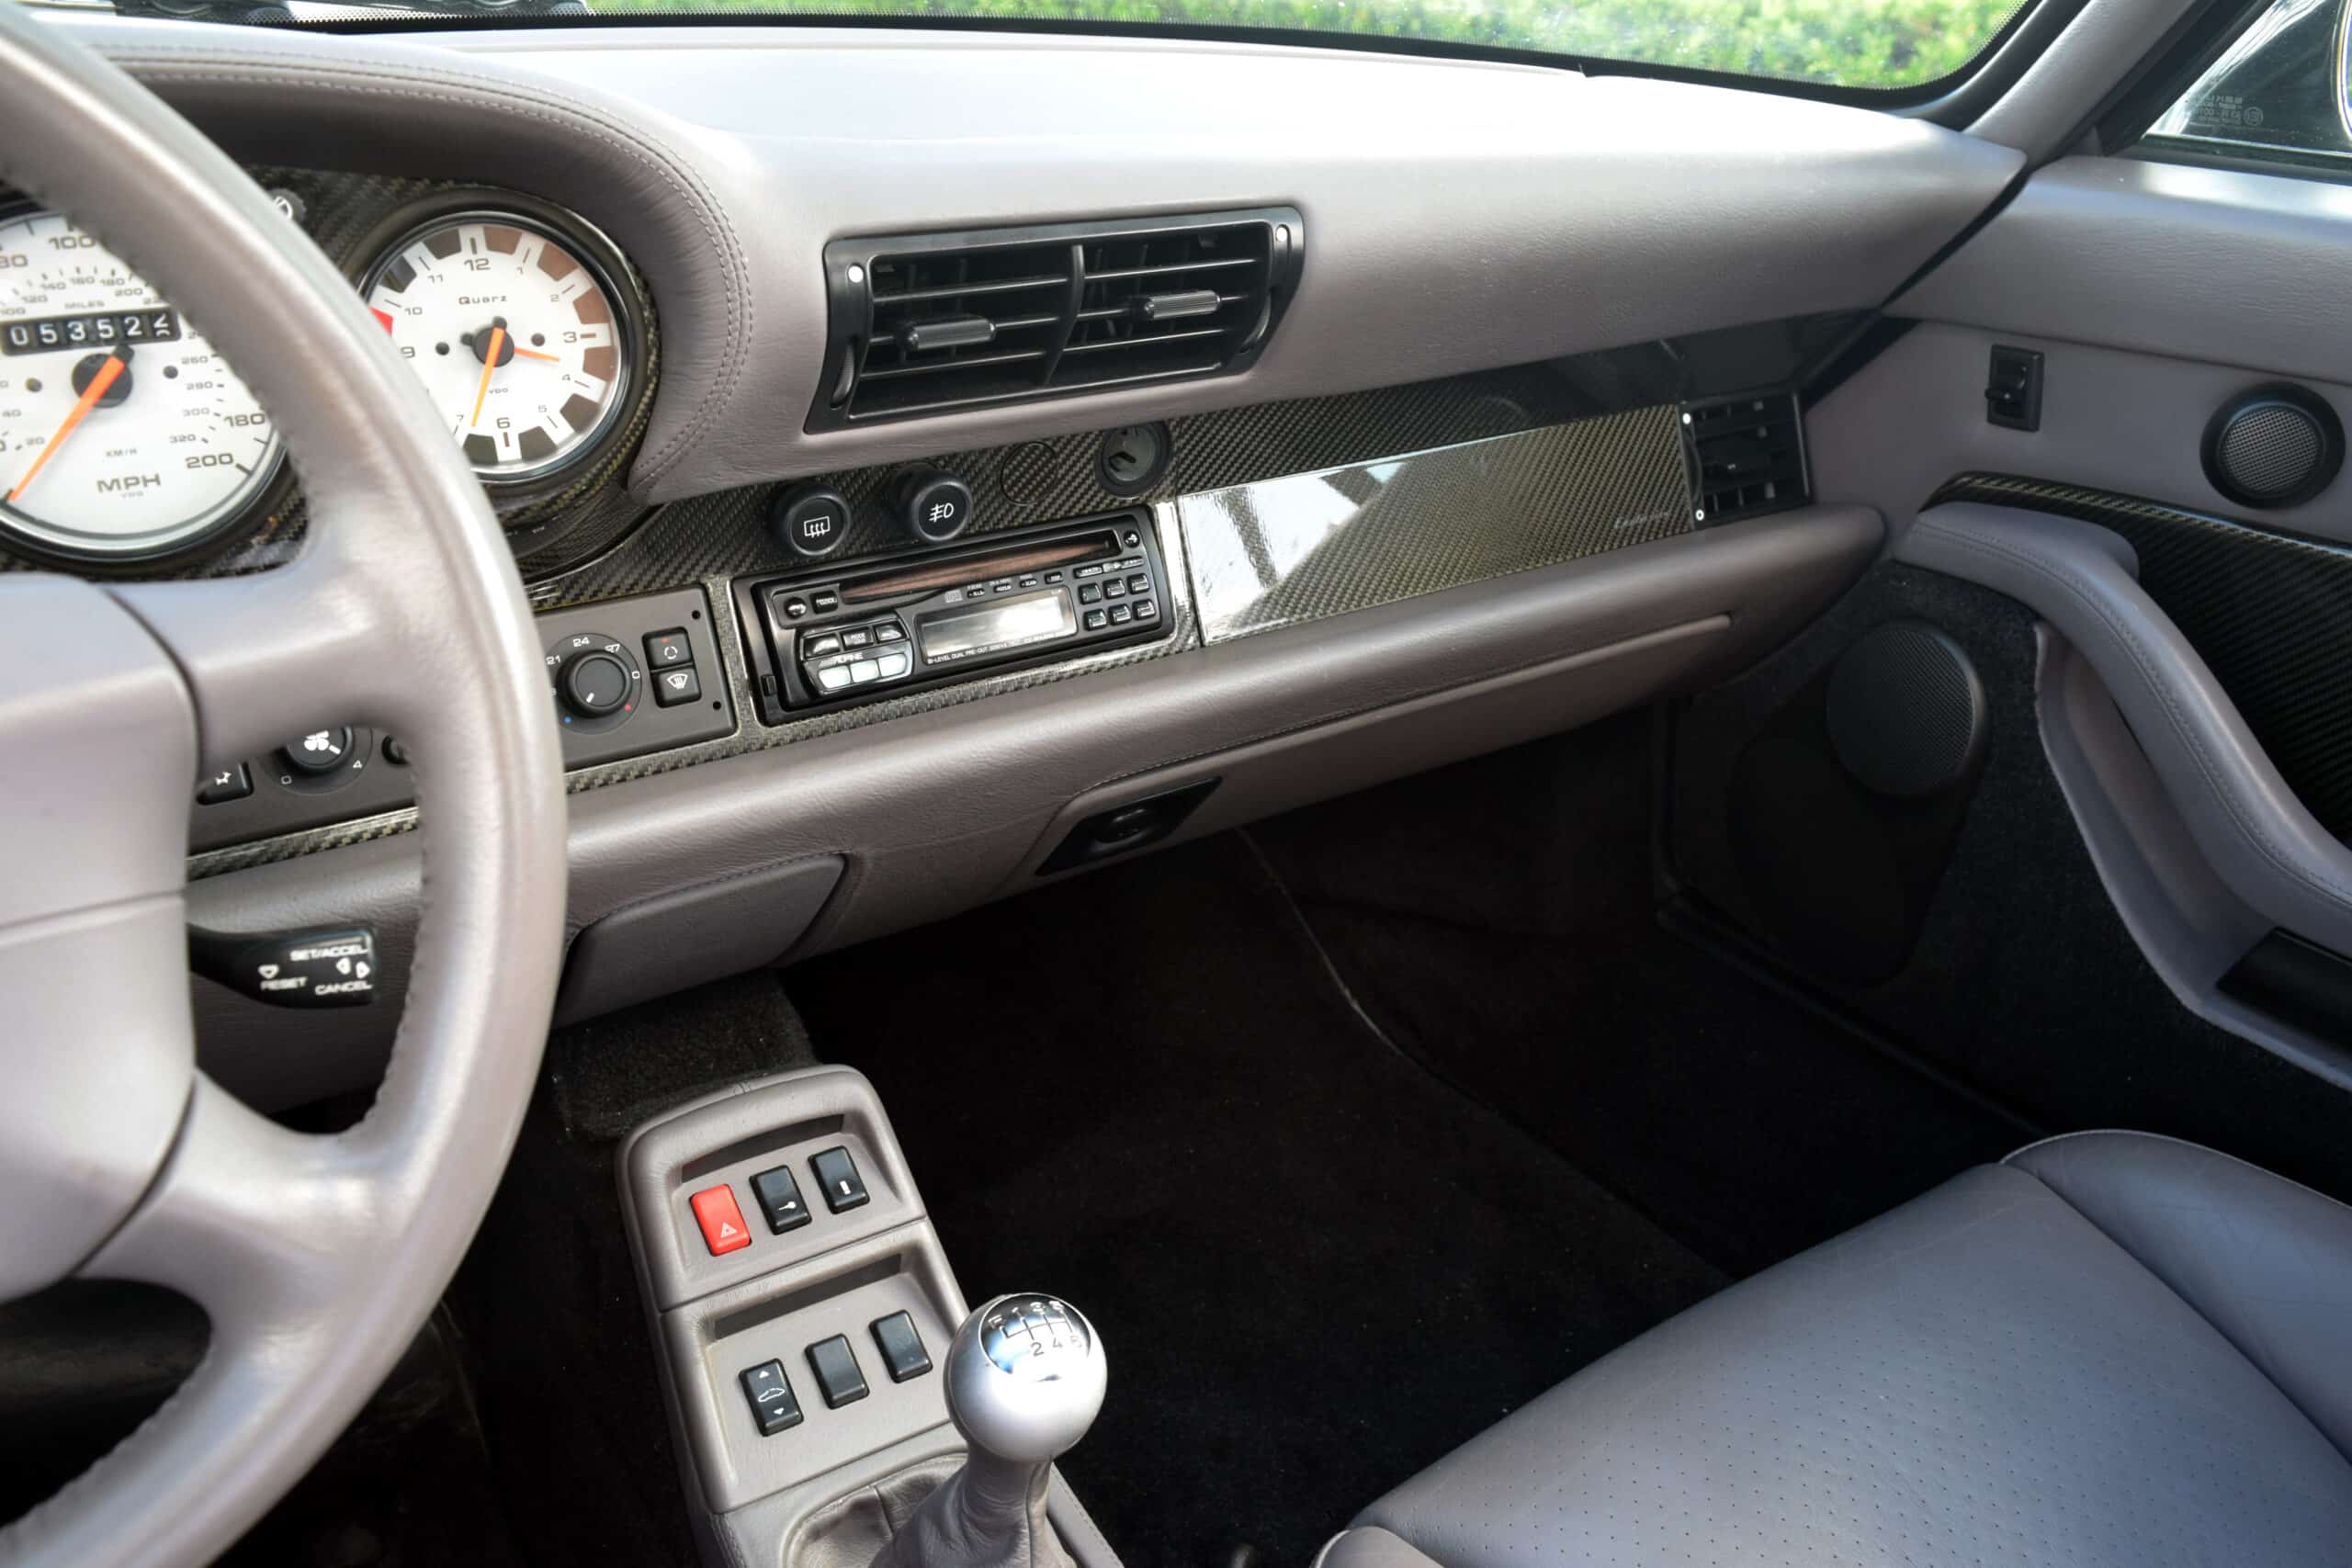 1996 Porsche 993 Turbo, Sports Seats, Carbon interior, major service